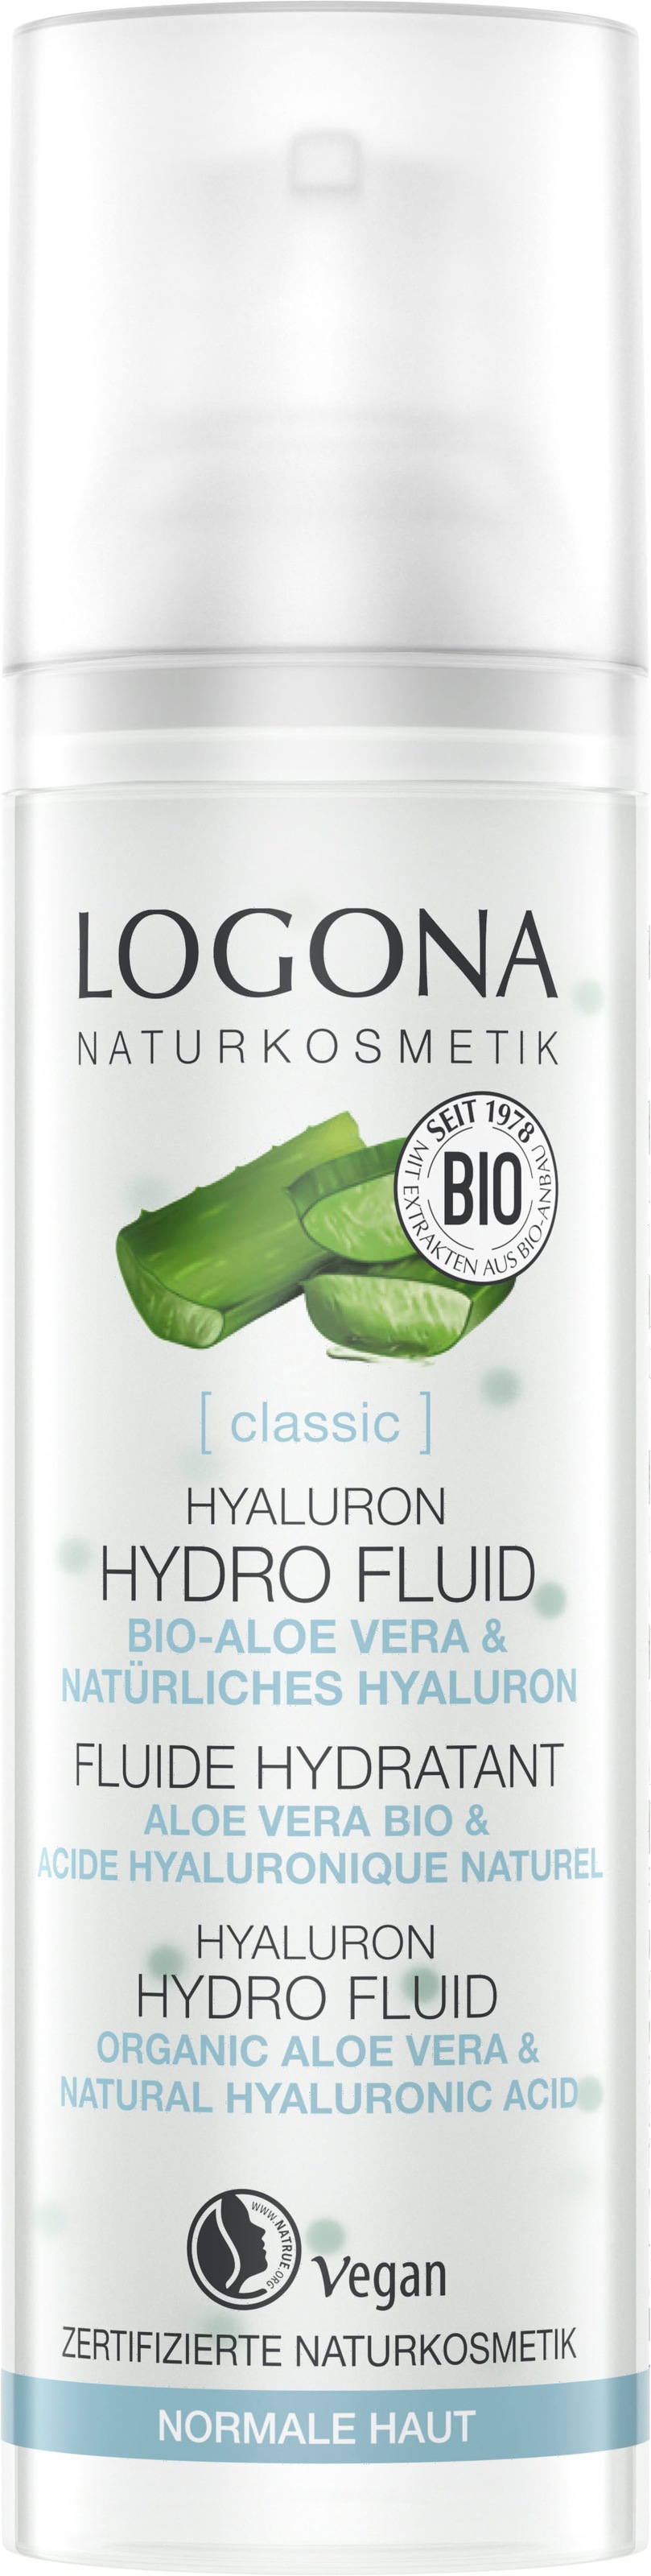 LOGONA Gesichtsfluid online Hyaluron »Logona kaufen BAUR | Fluid« classic Hydro